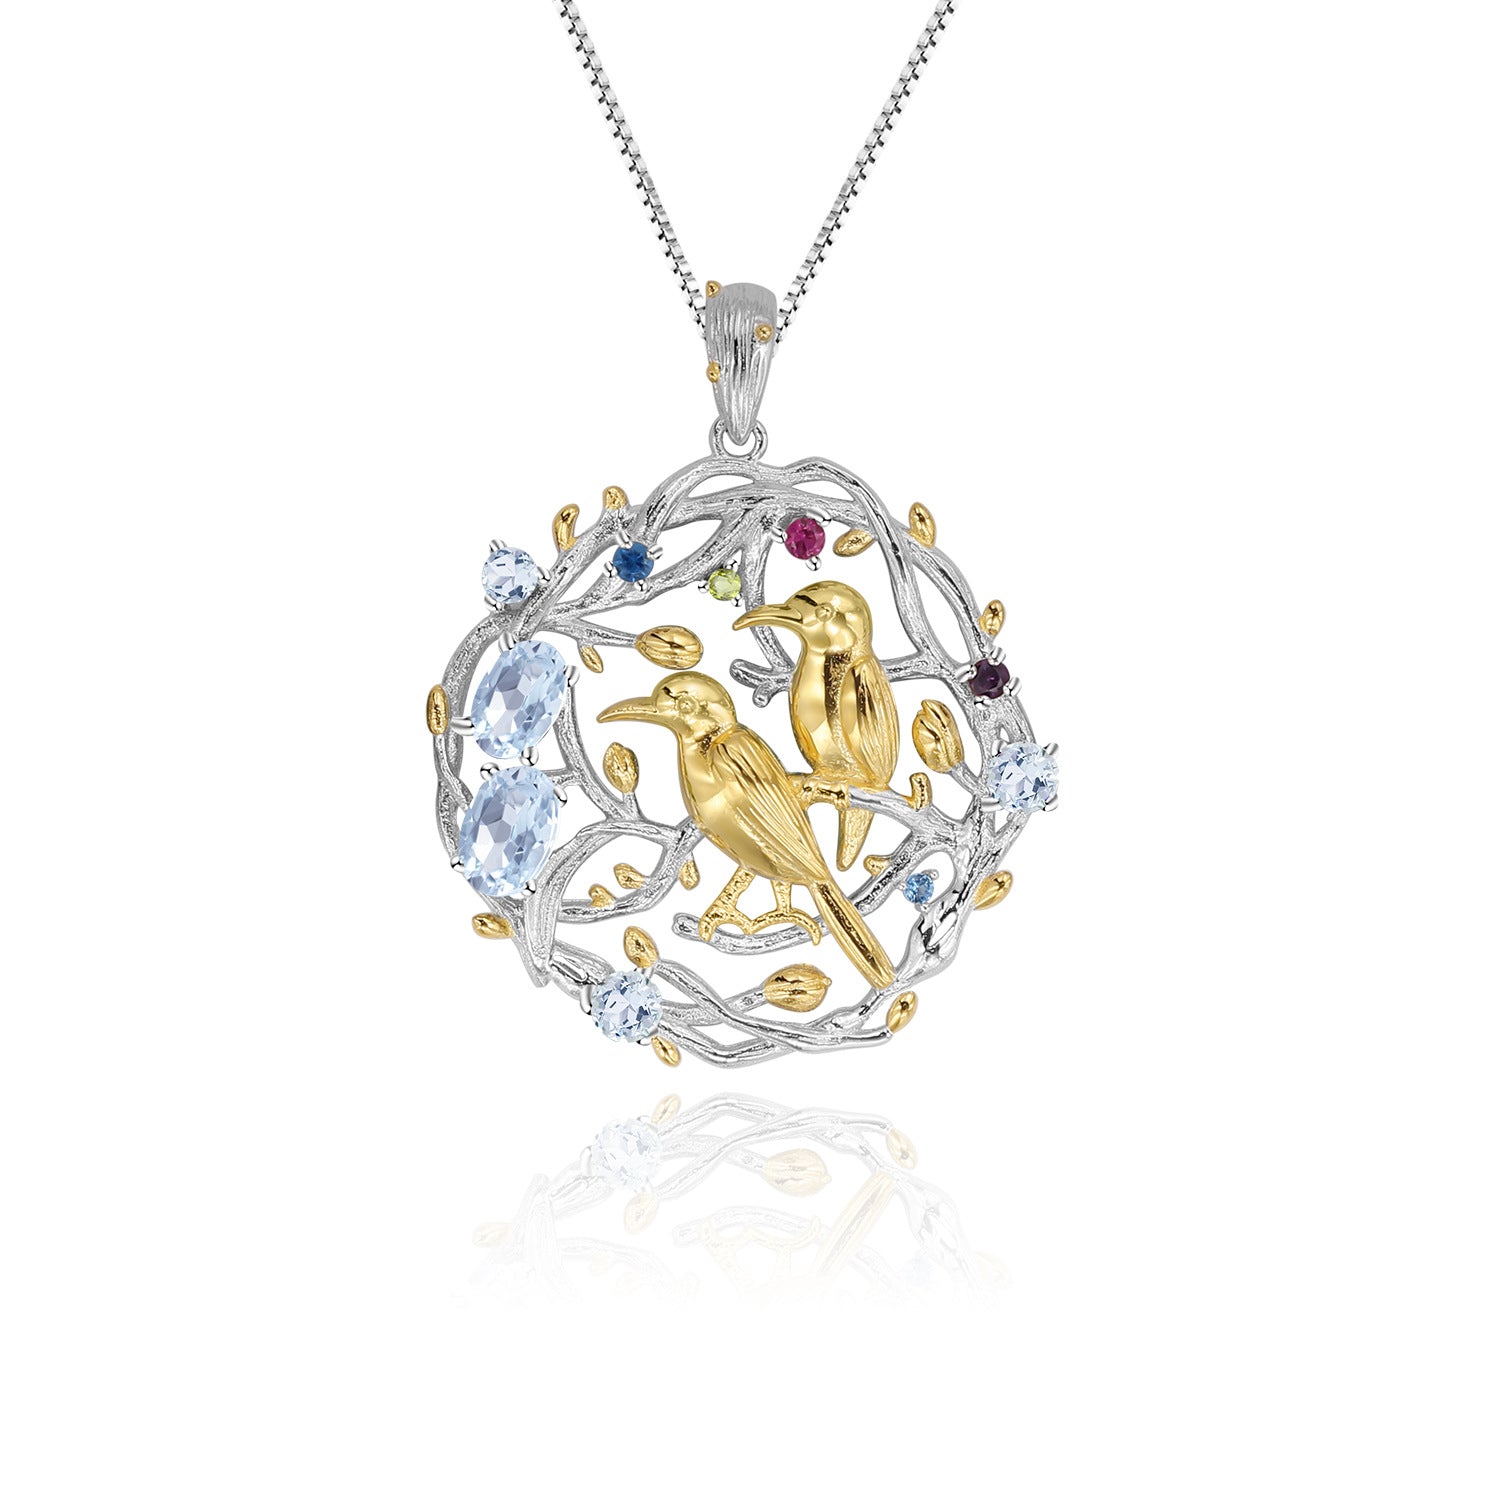 Premium Personalized Design Natural Gemstone Birds Pendant Silver Necklace for Women